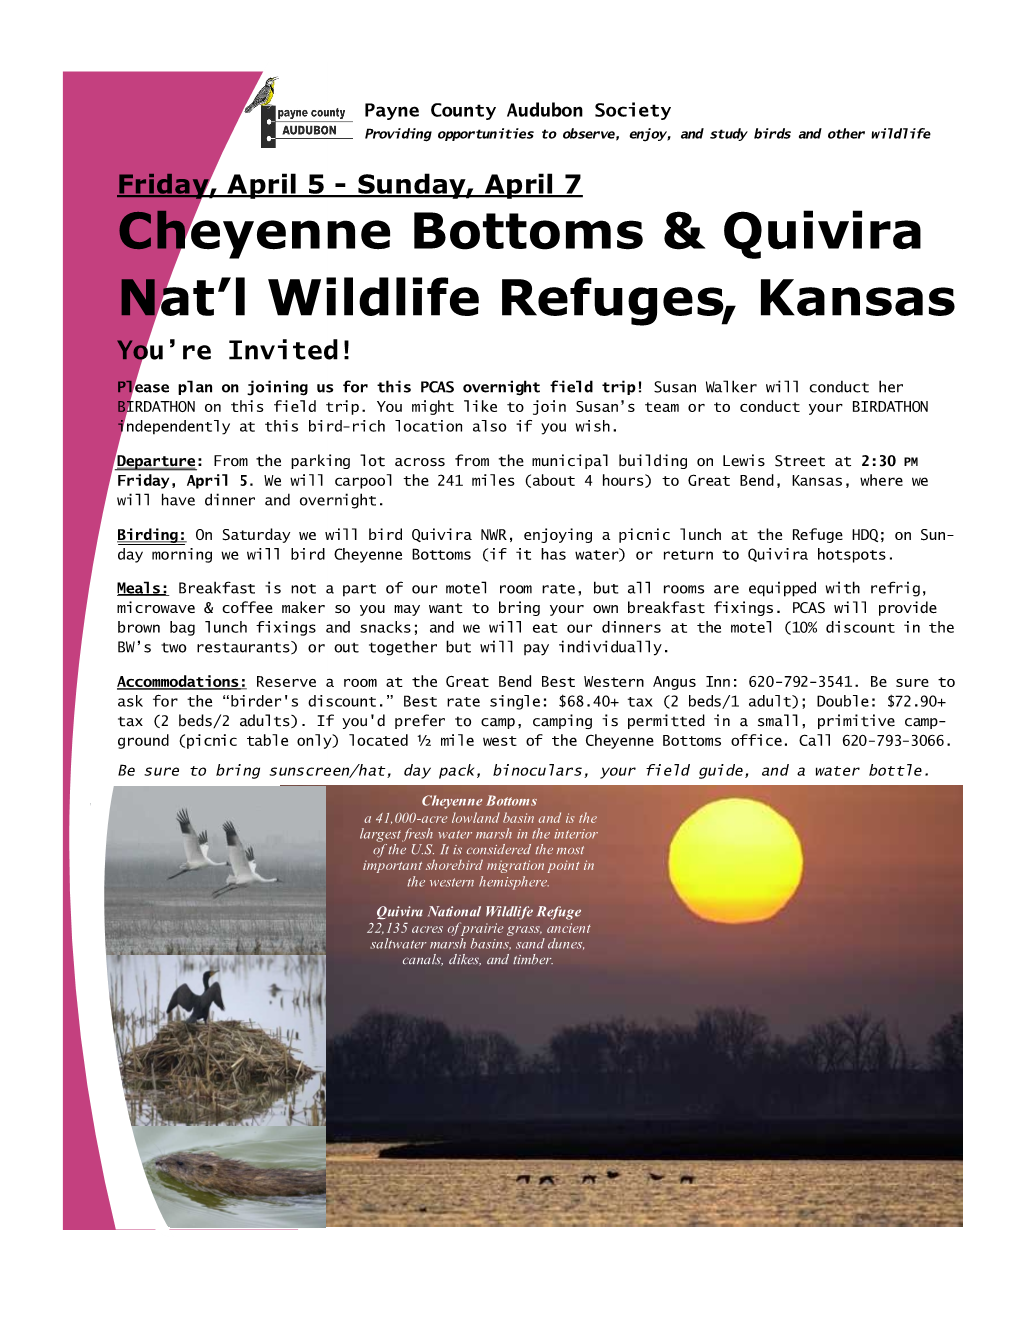 Cheyenne Bottoms & Quivira Nat'l Wildlife Refuges, Kansas